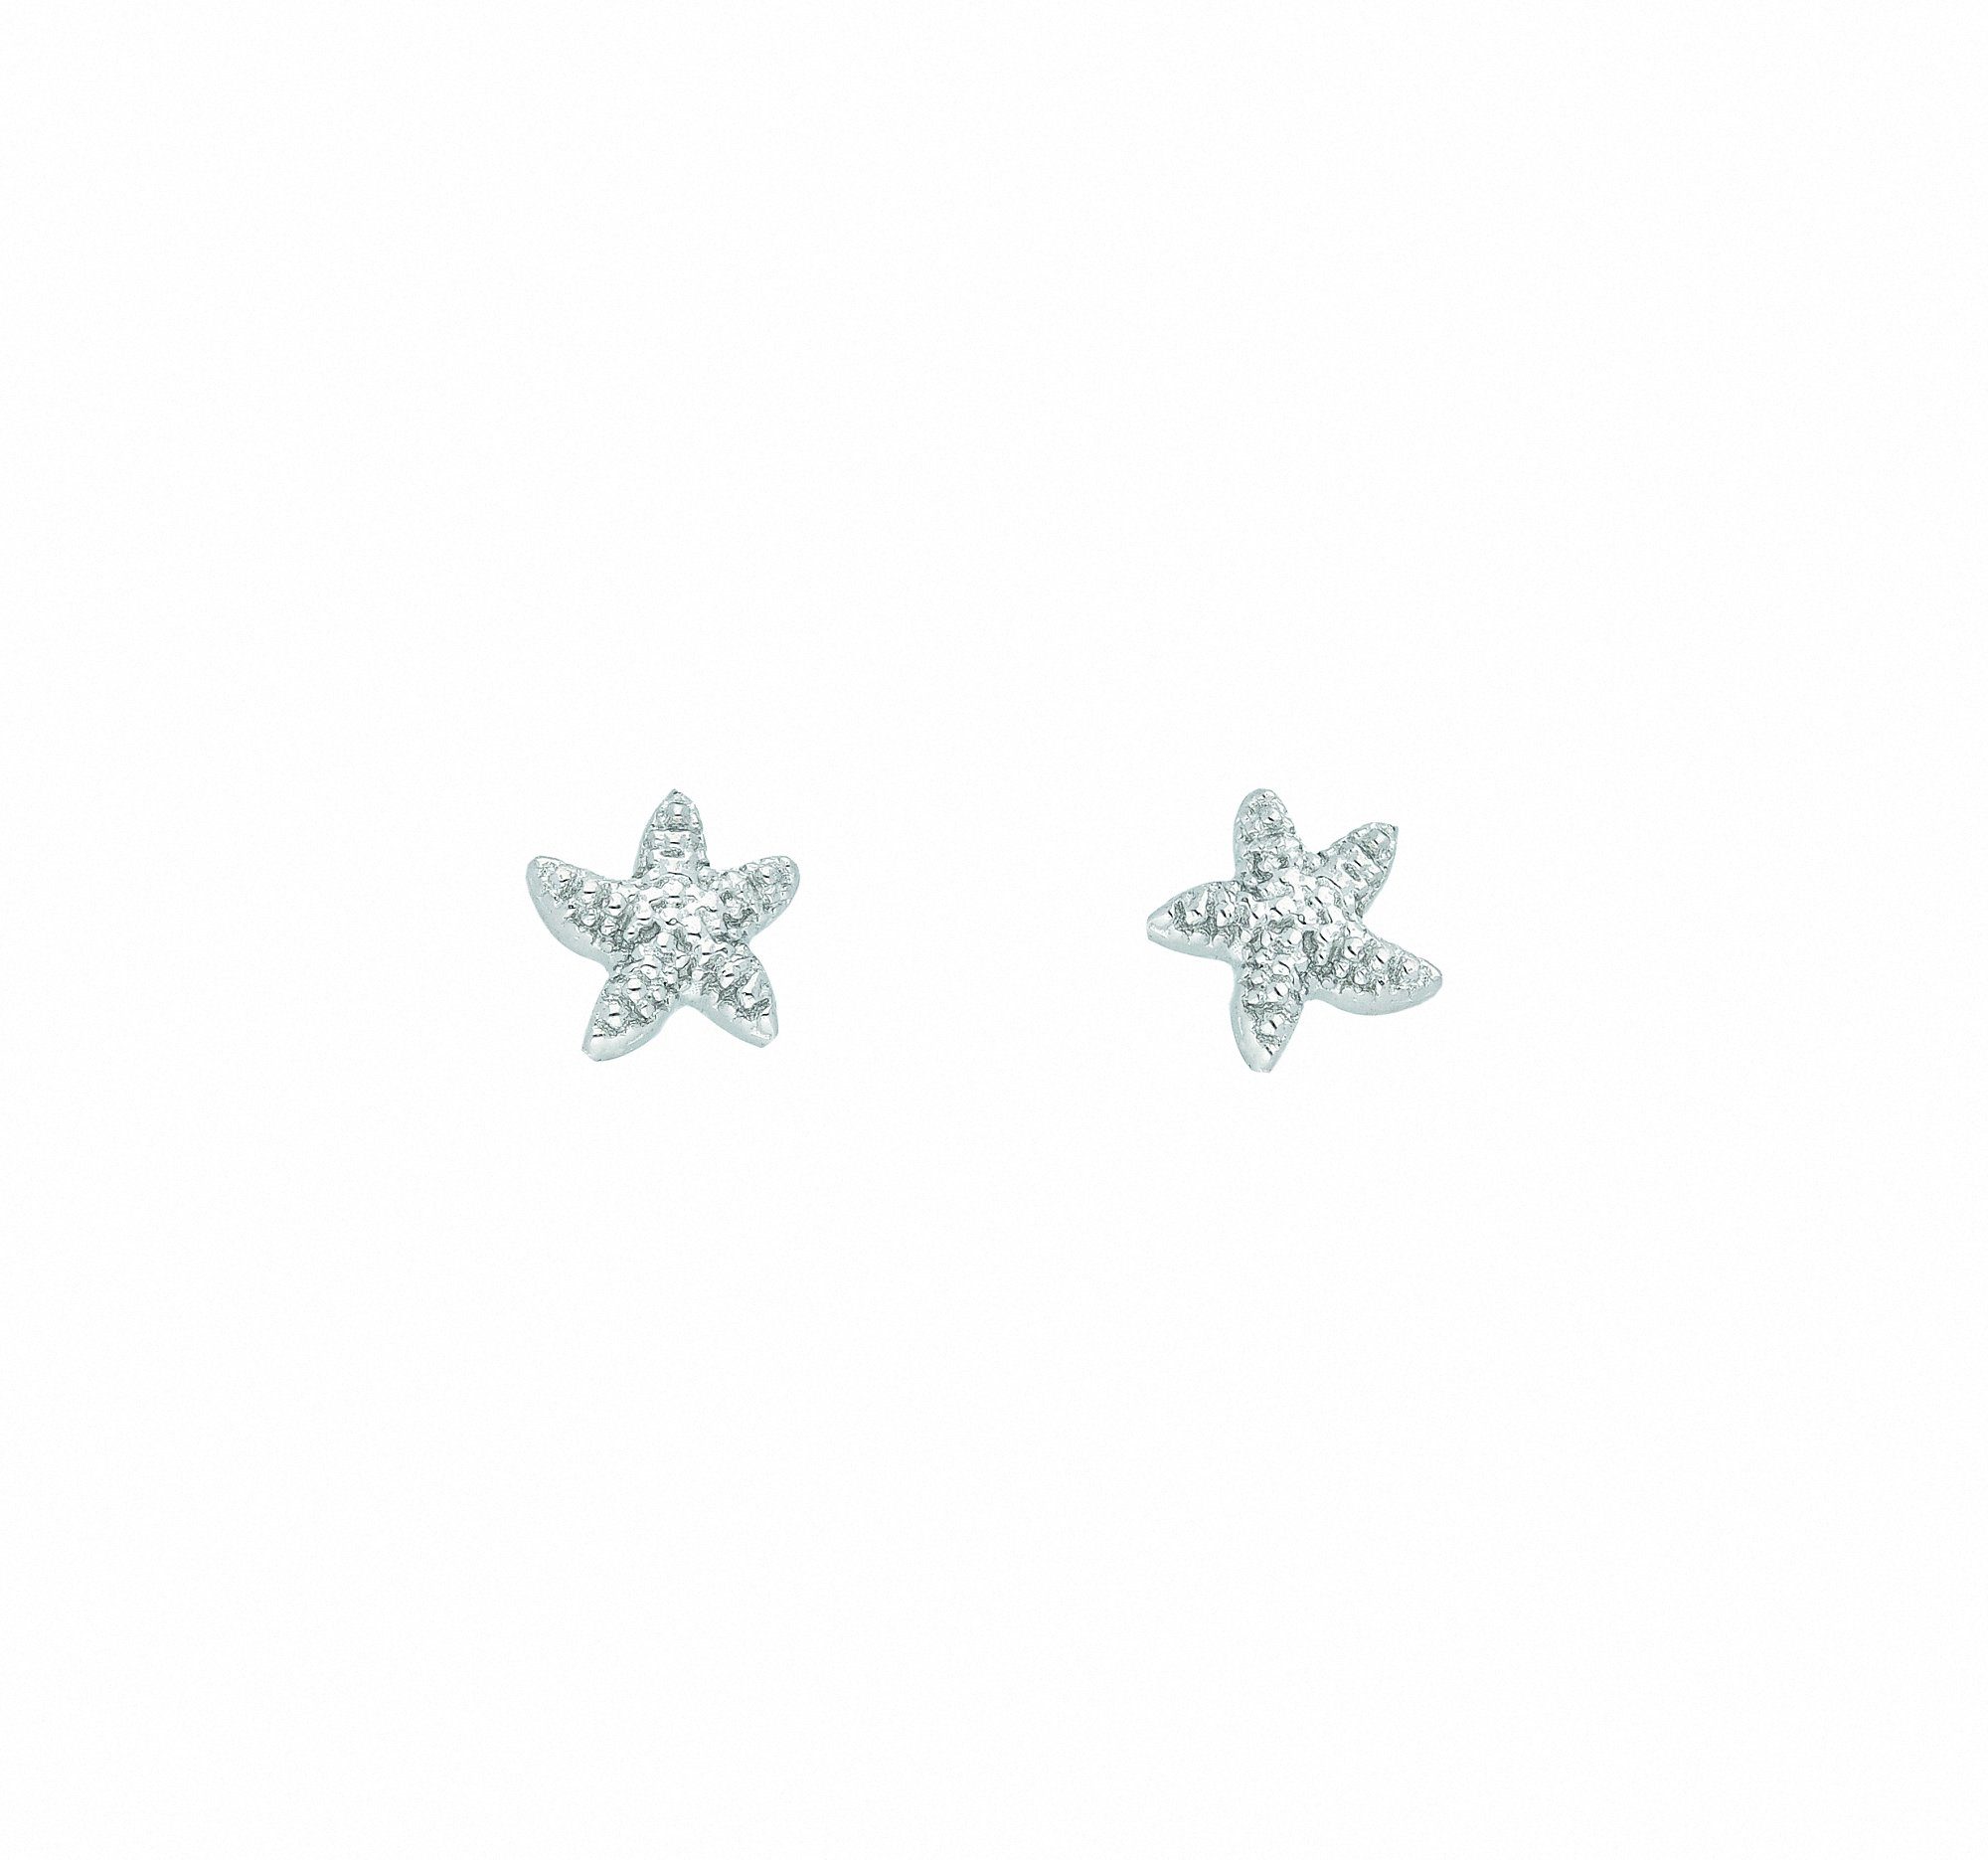 Damen Schmuck Adelia´s Paar Ohrhänger 1 Paar 925 Silber Ohrringe / Ohrstecker Seestern, 925 Sterling Silber Silberschmuck für Da